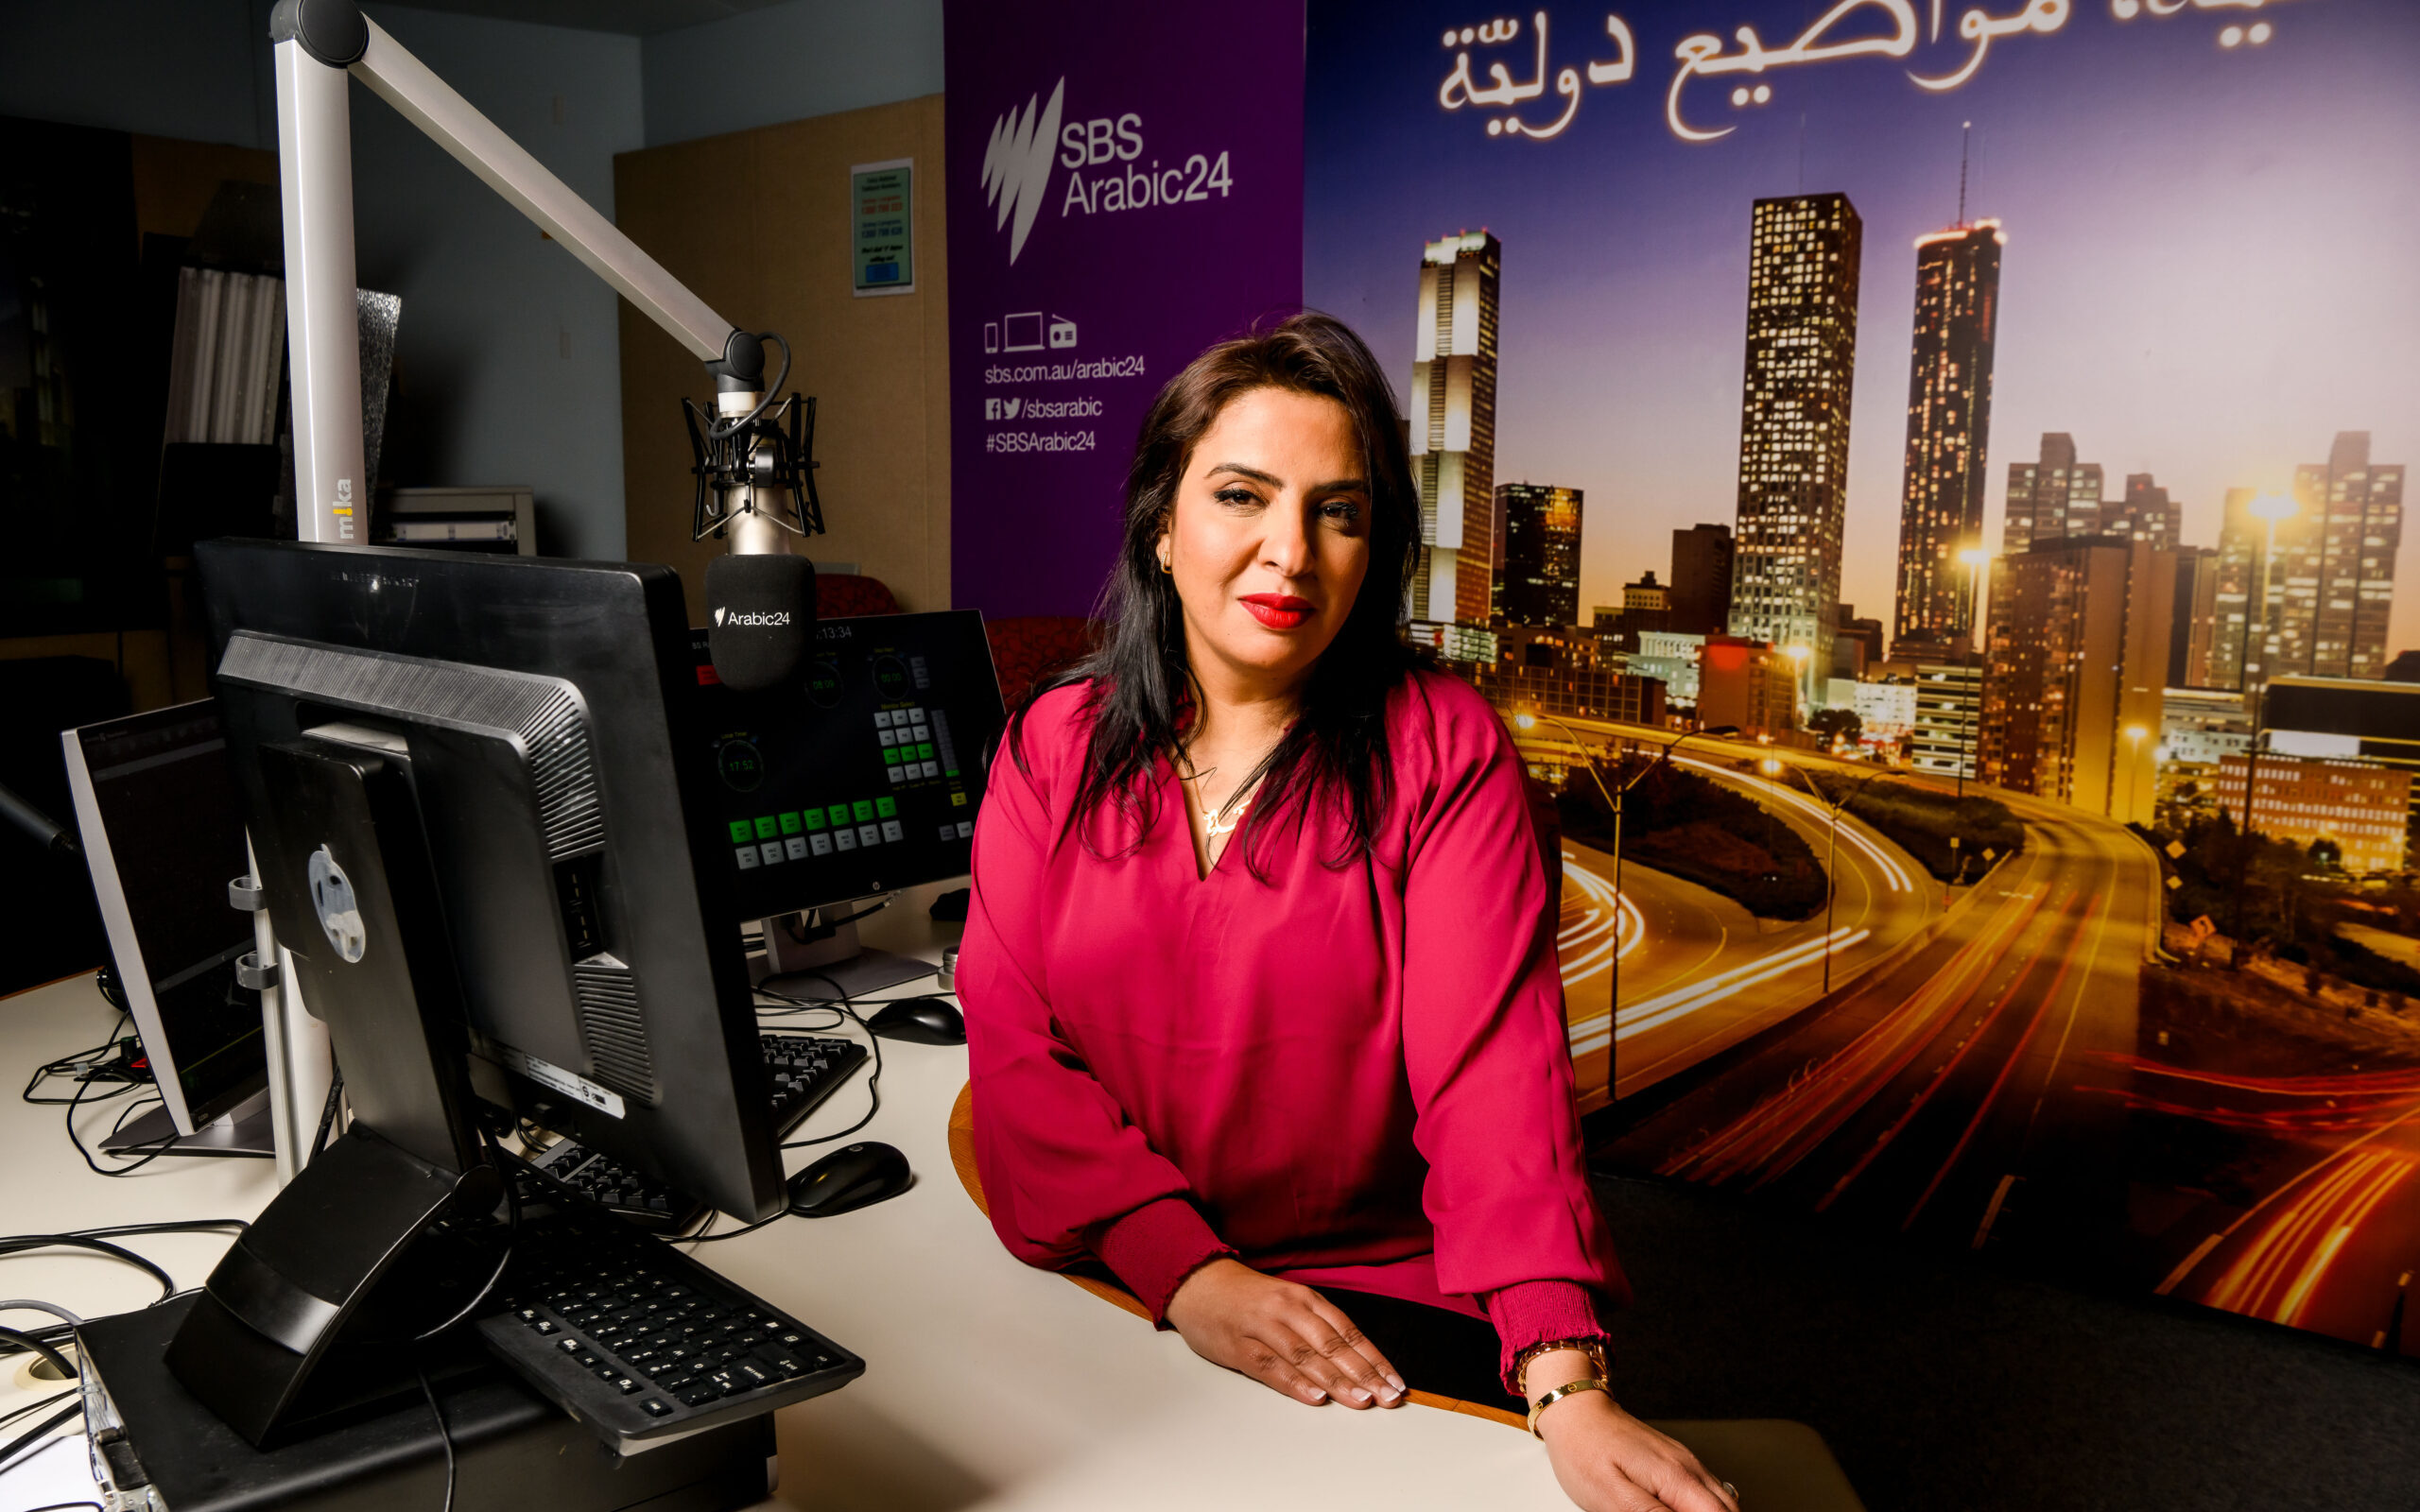 SBS Arabic24's Sanae Ouahib